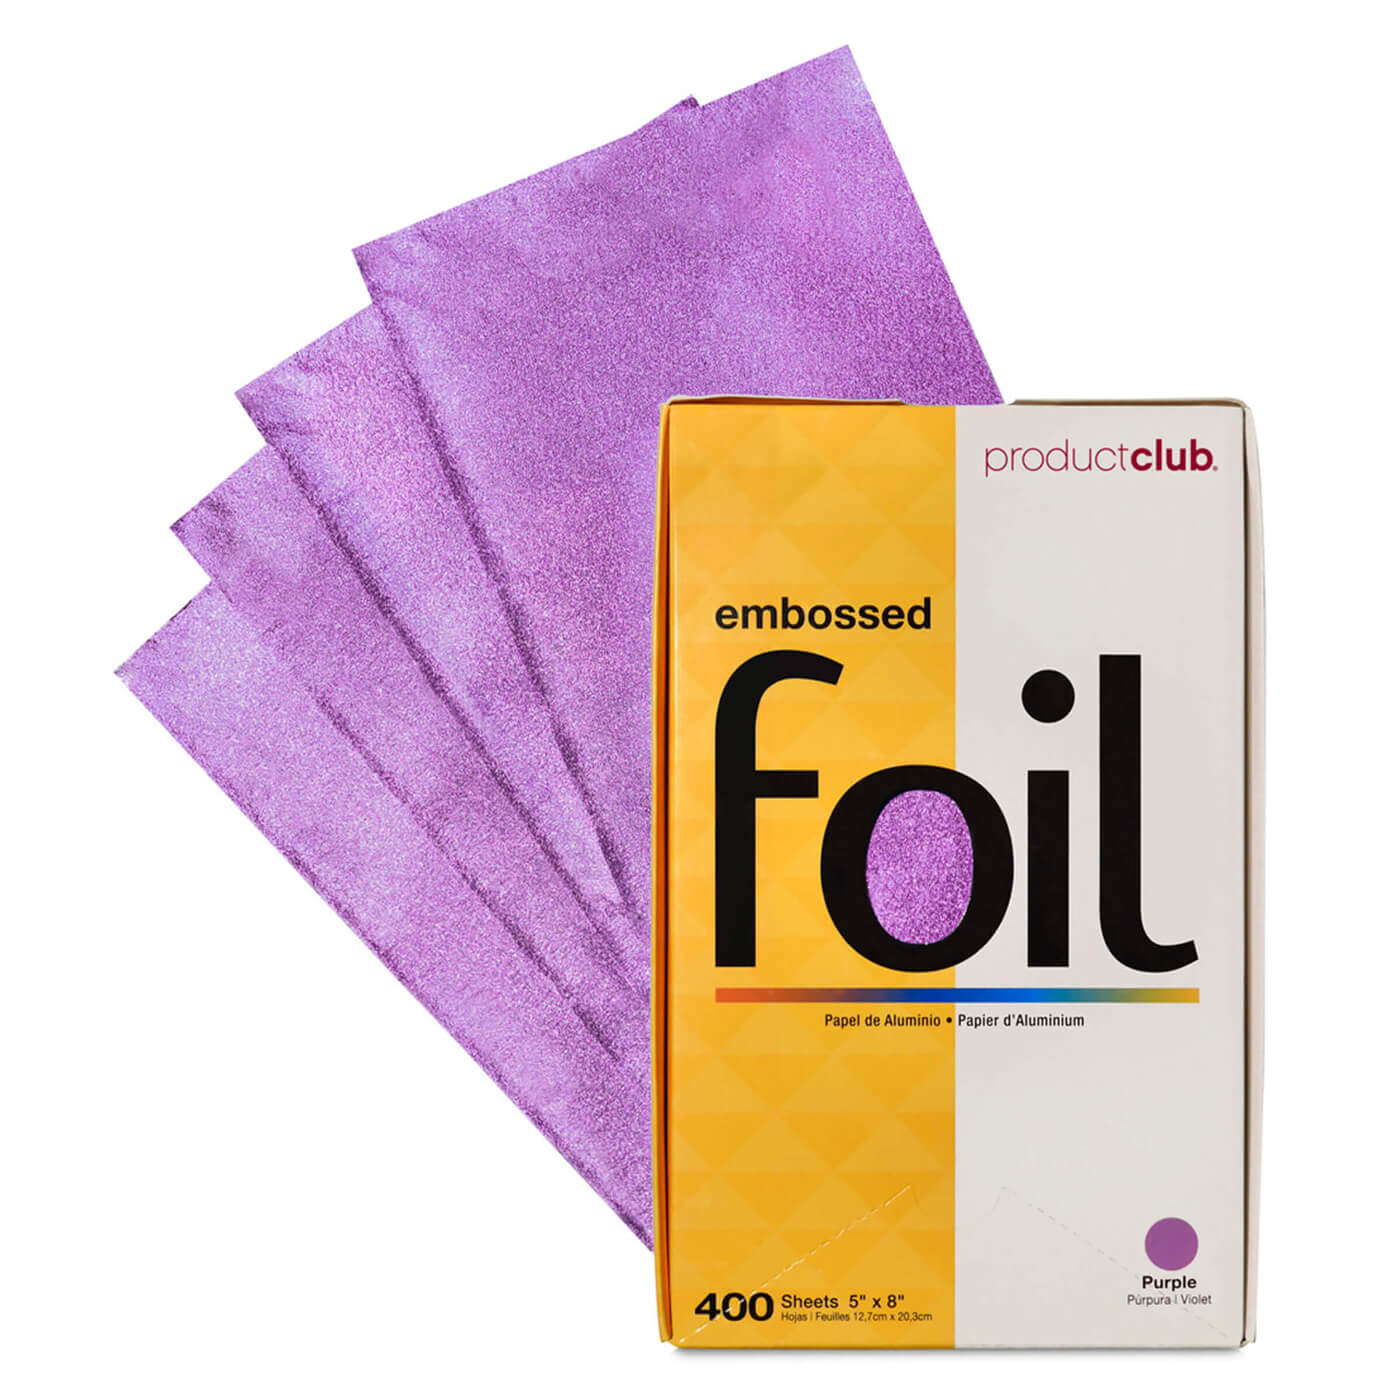 EF400-PU Product Club Precut Purple Hair Foil